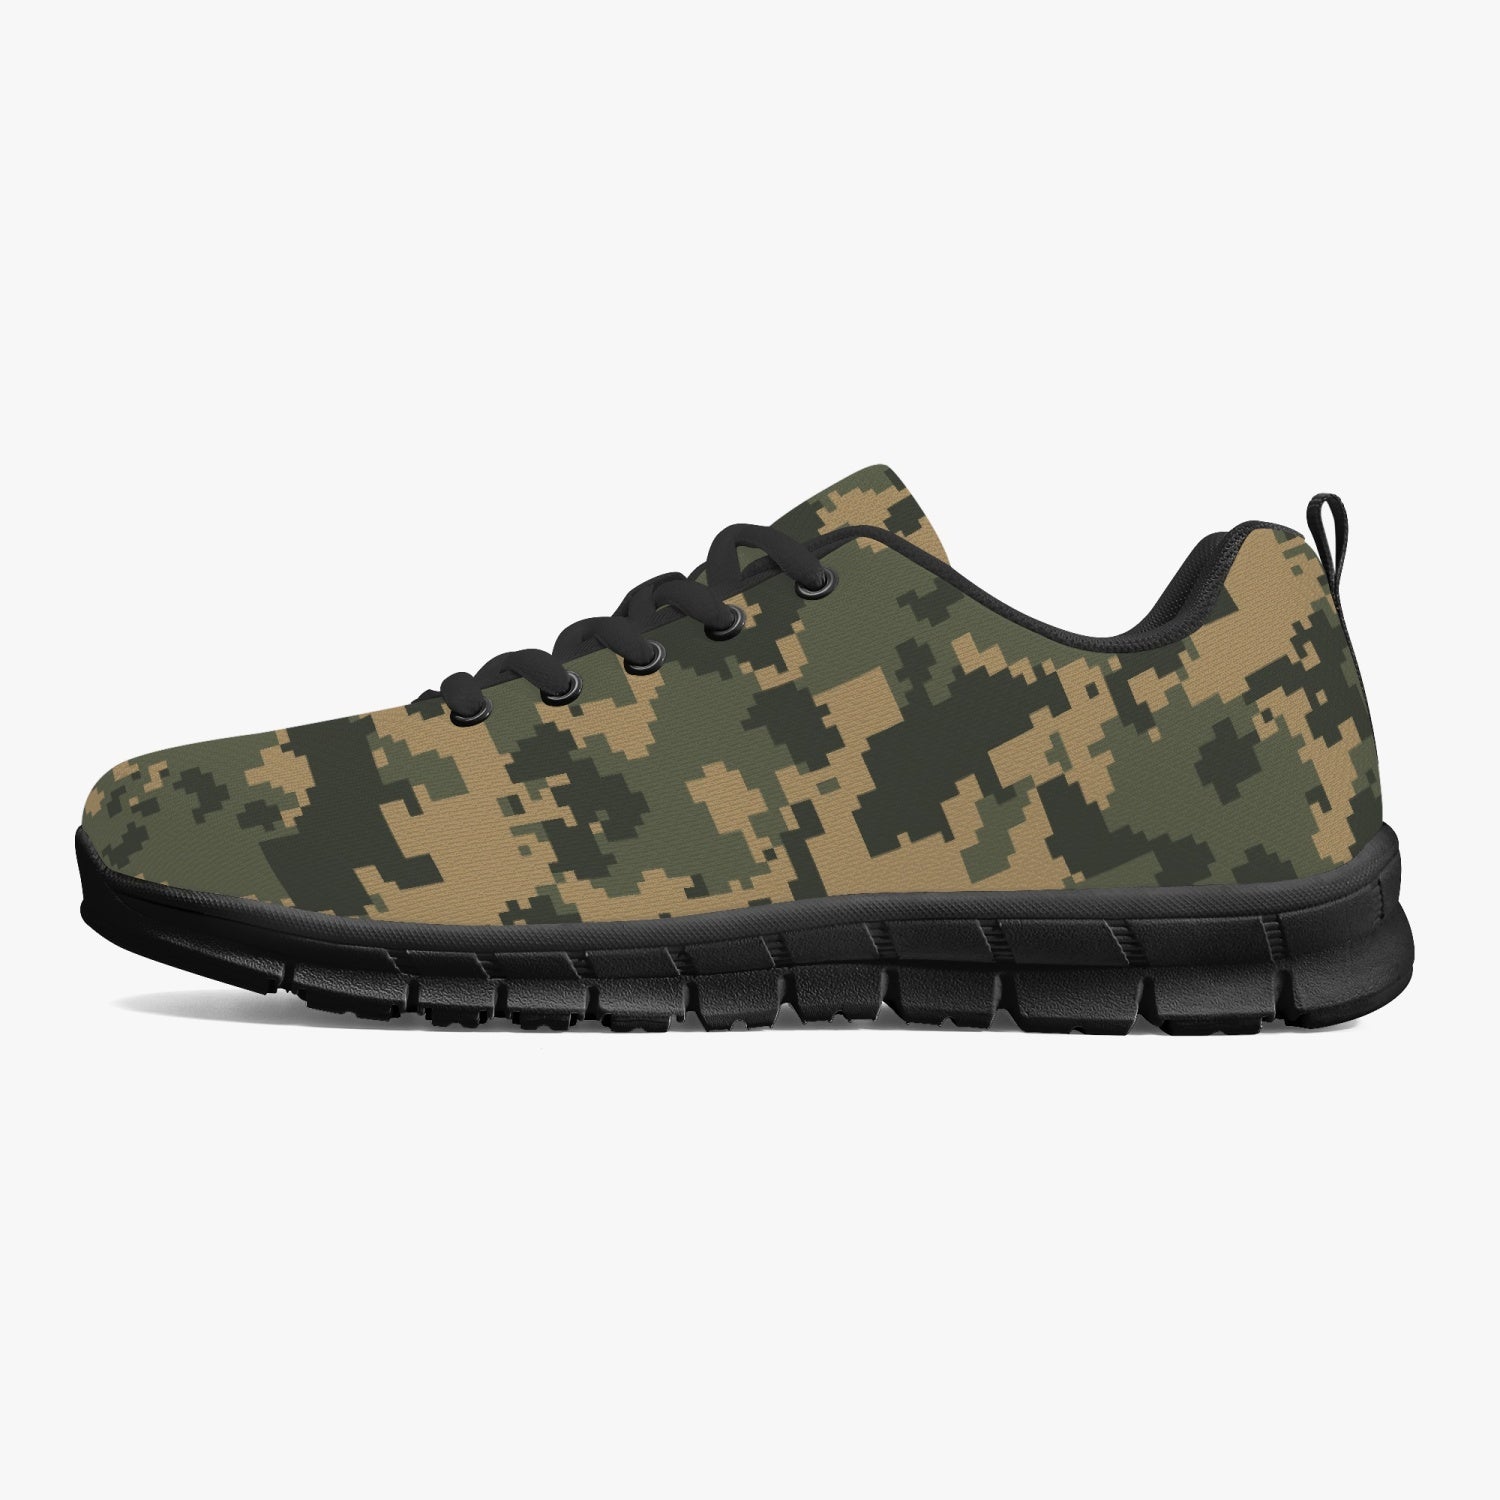 Digital Army Camo Sneakers